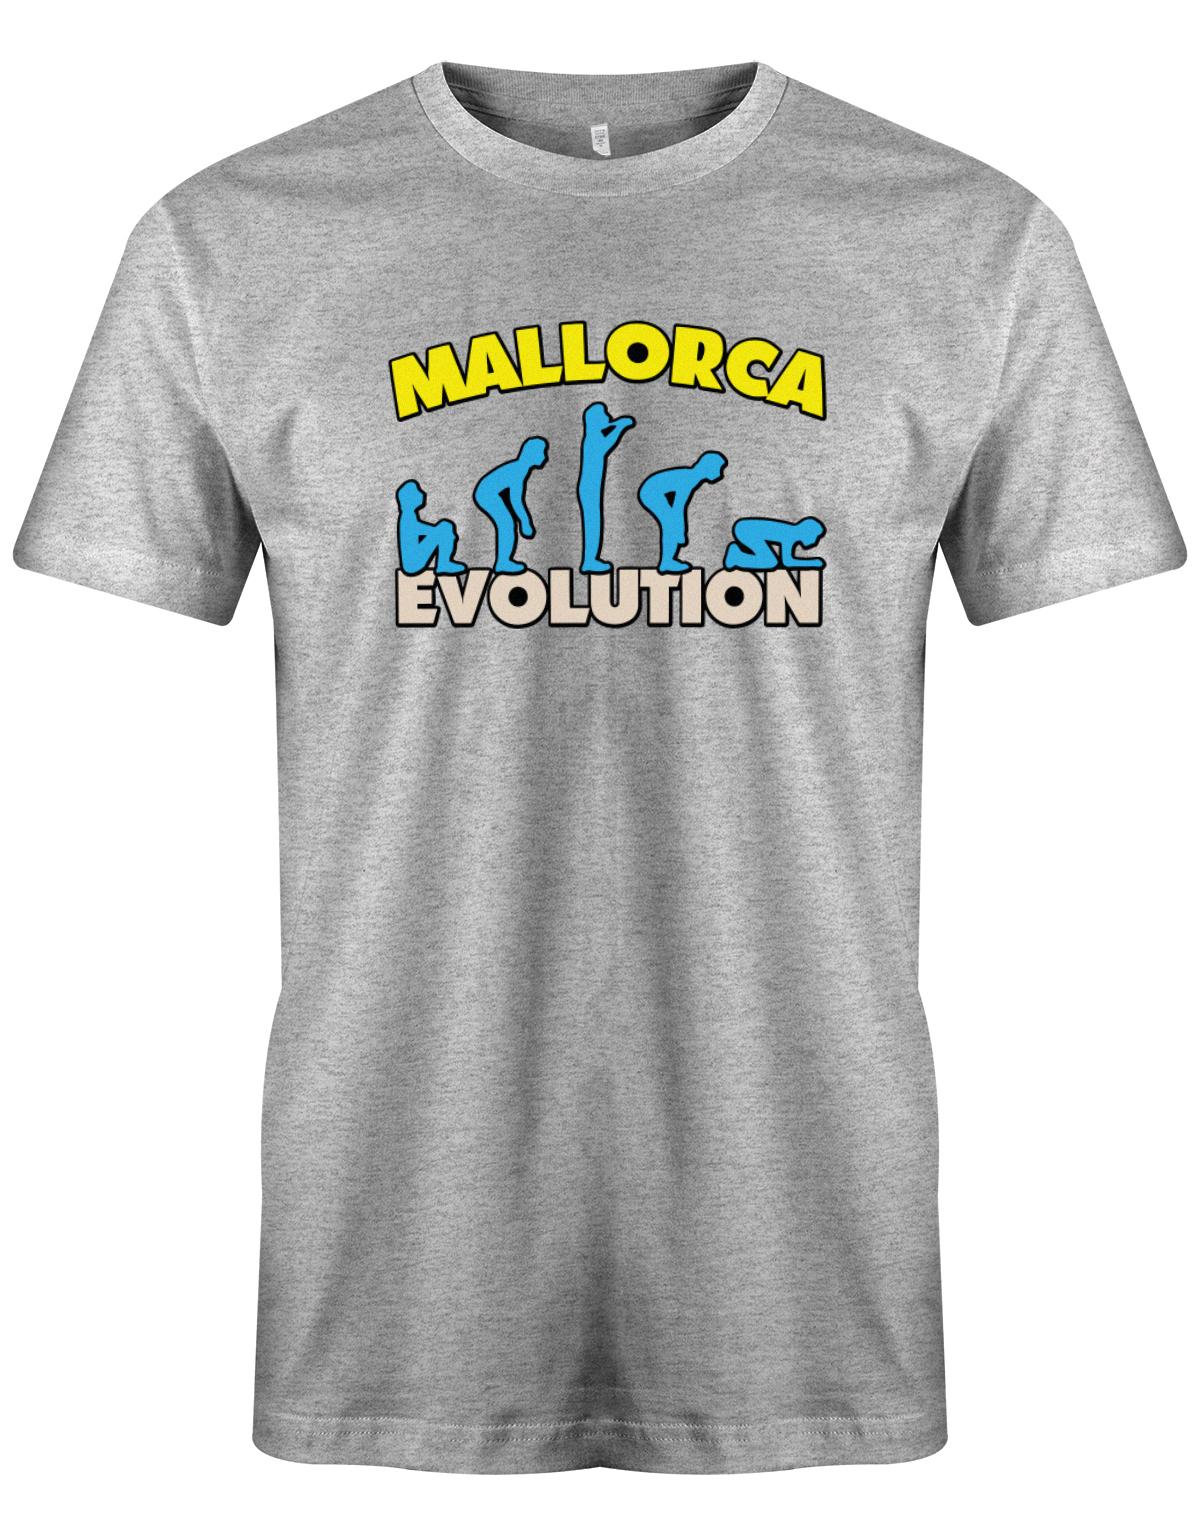 Mallorca-Evolution-Urlaub-Herren-Shirt-grau